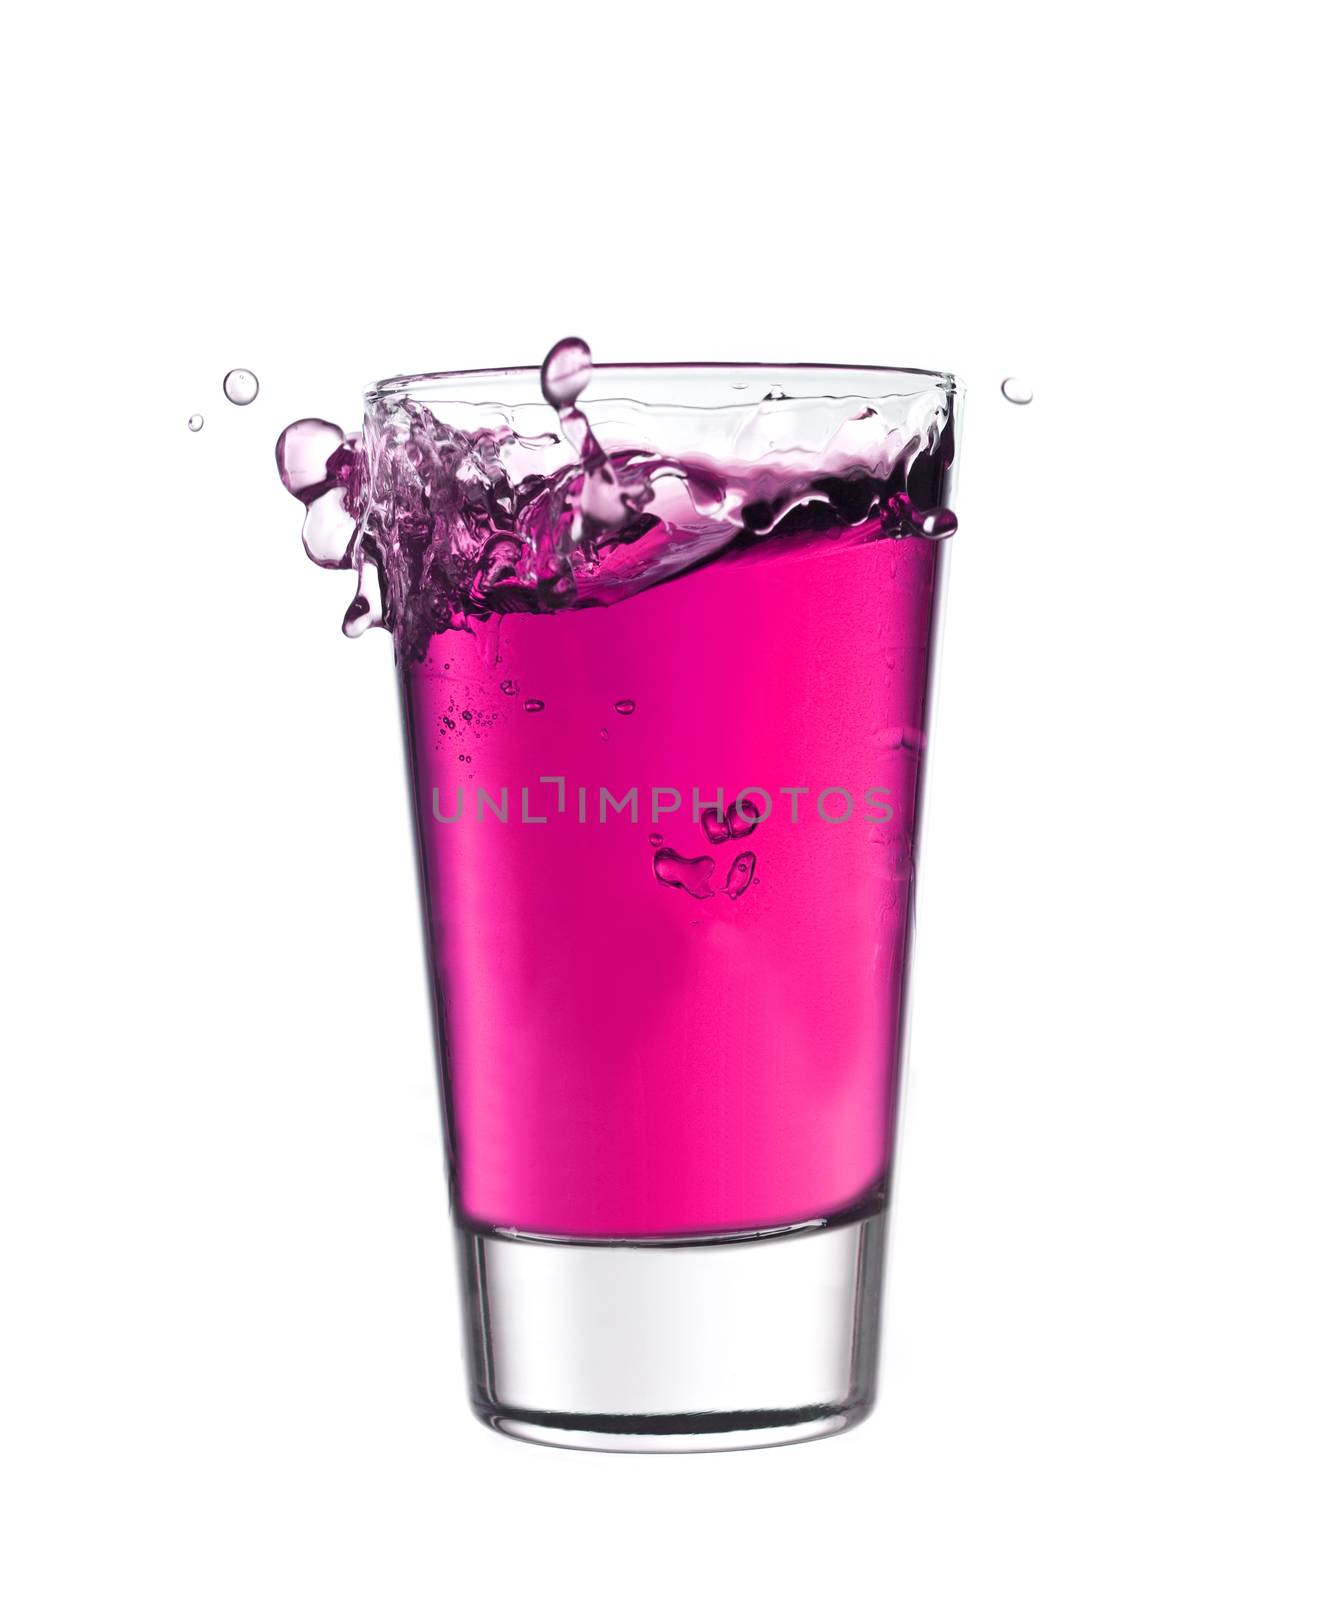 Splash in a glass of pink lemonade by gemenacom